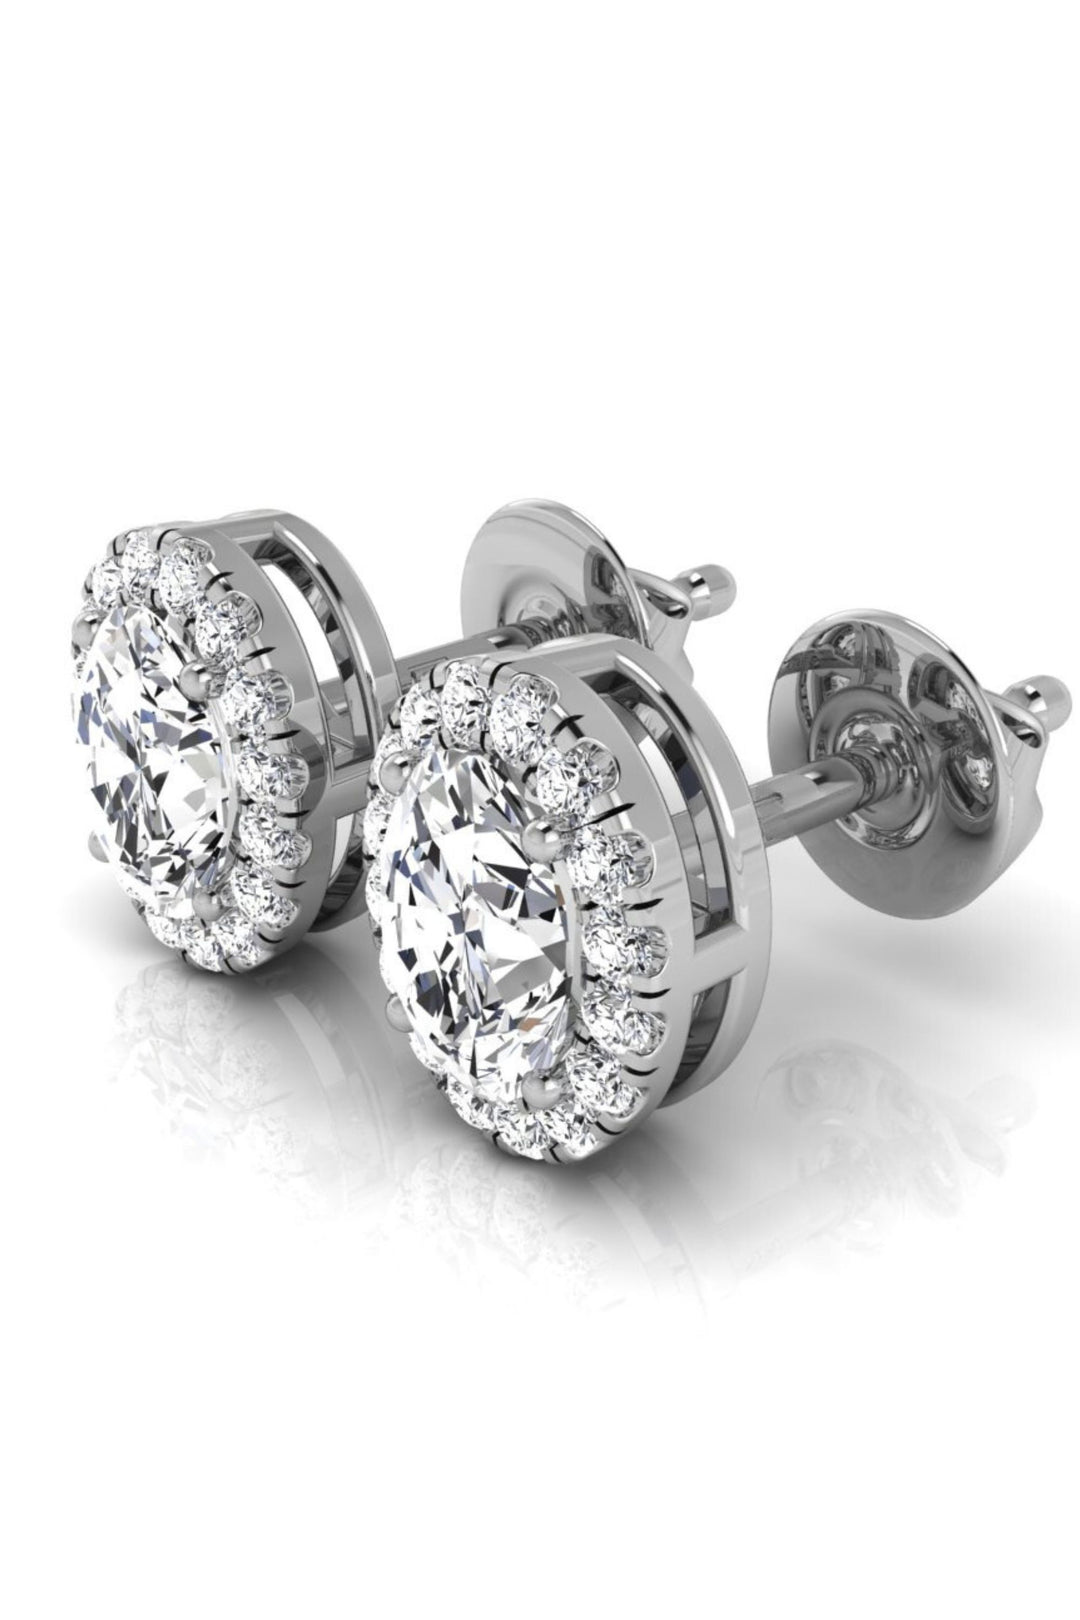 Oval Cut Moissanite Halo Diamond Stud Earrings for Her